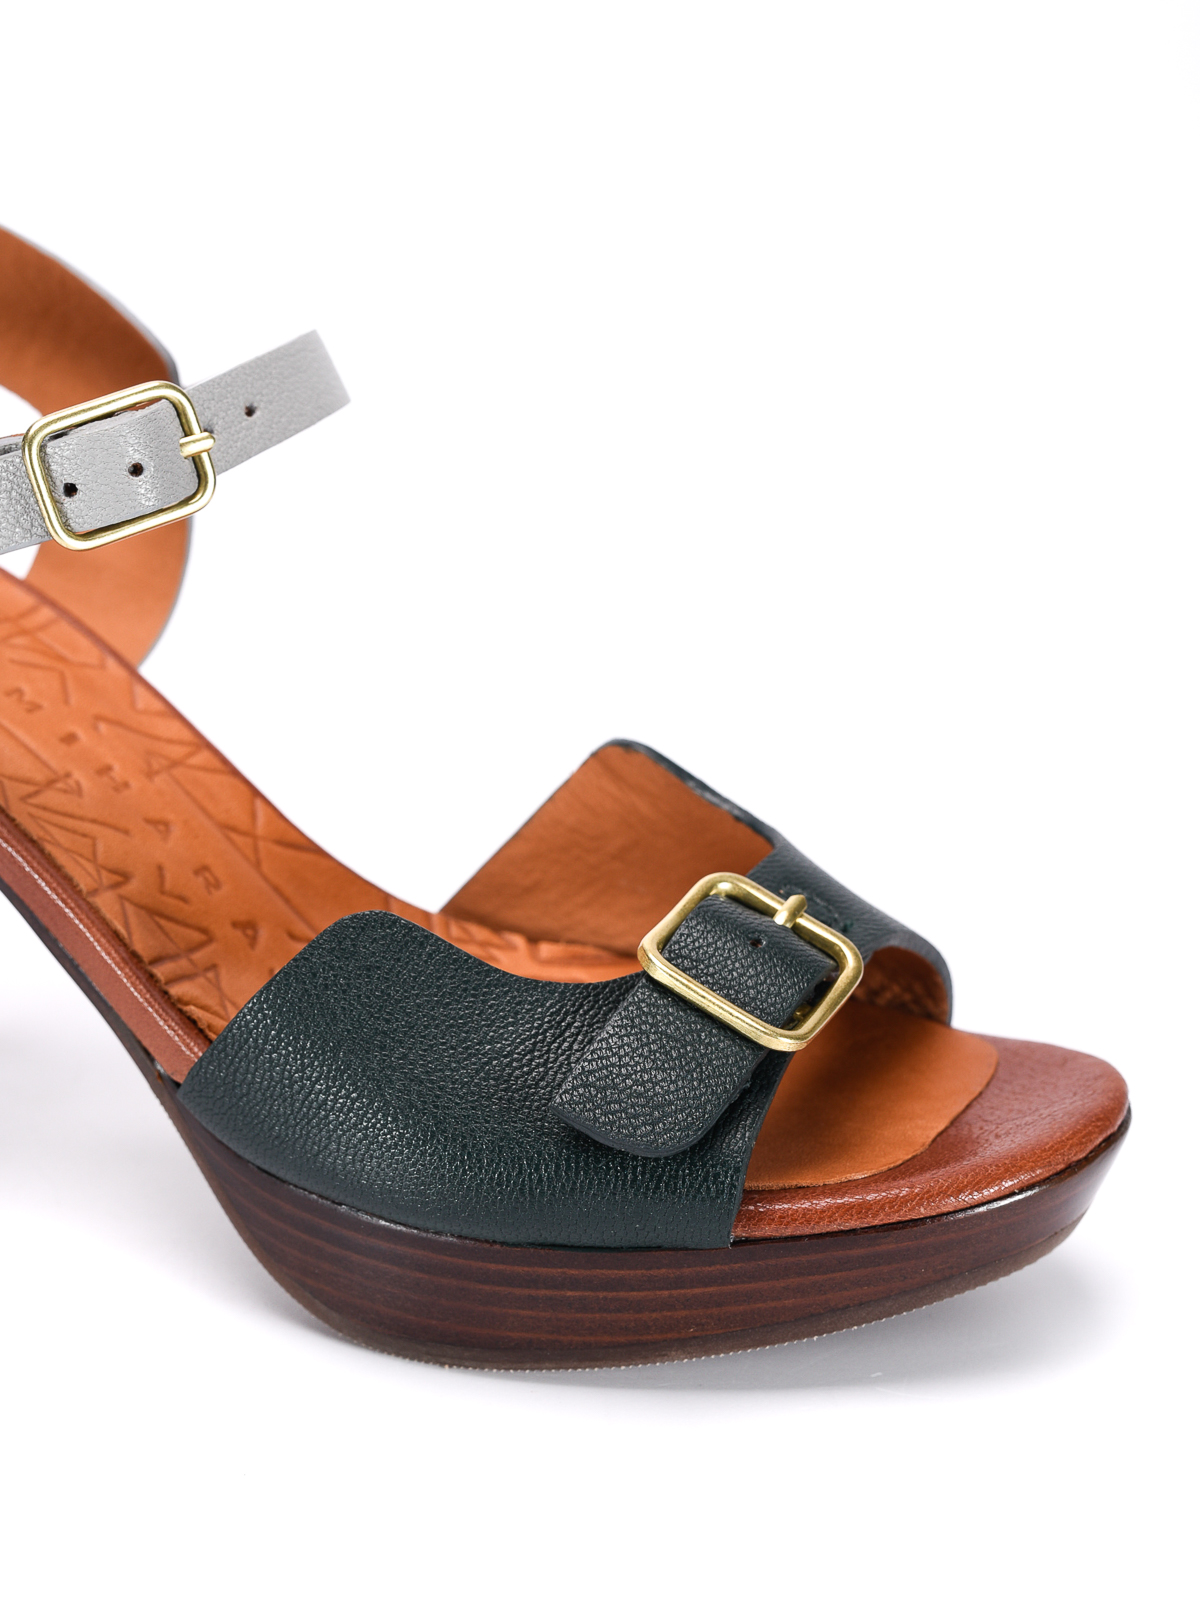 bronze Uredelighed Suradam Sandals Chie Mihara - Denki sandals - DENKI | Shop online at iKRIX